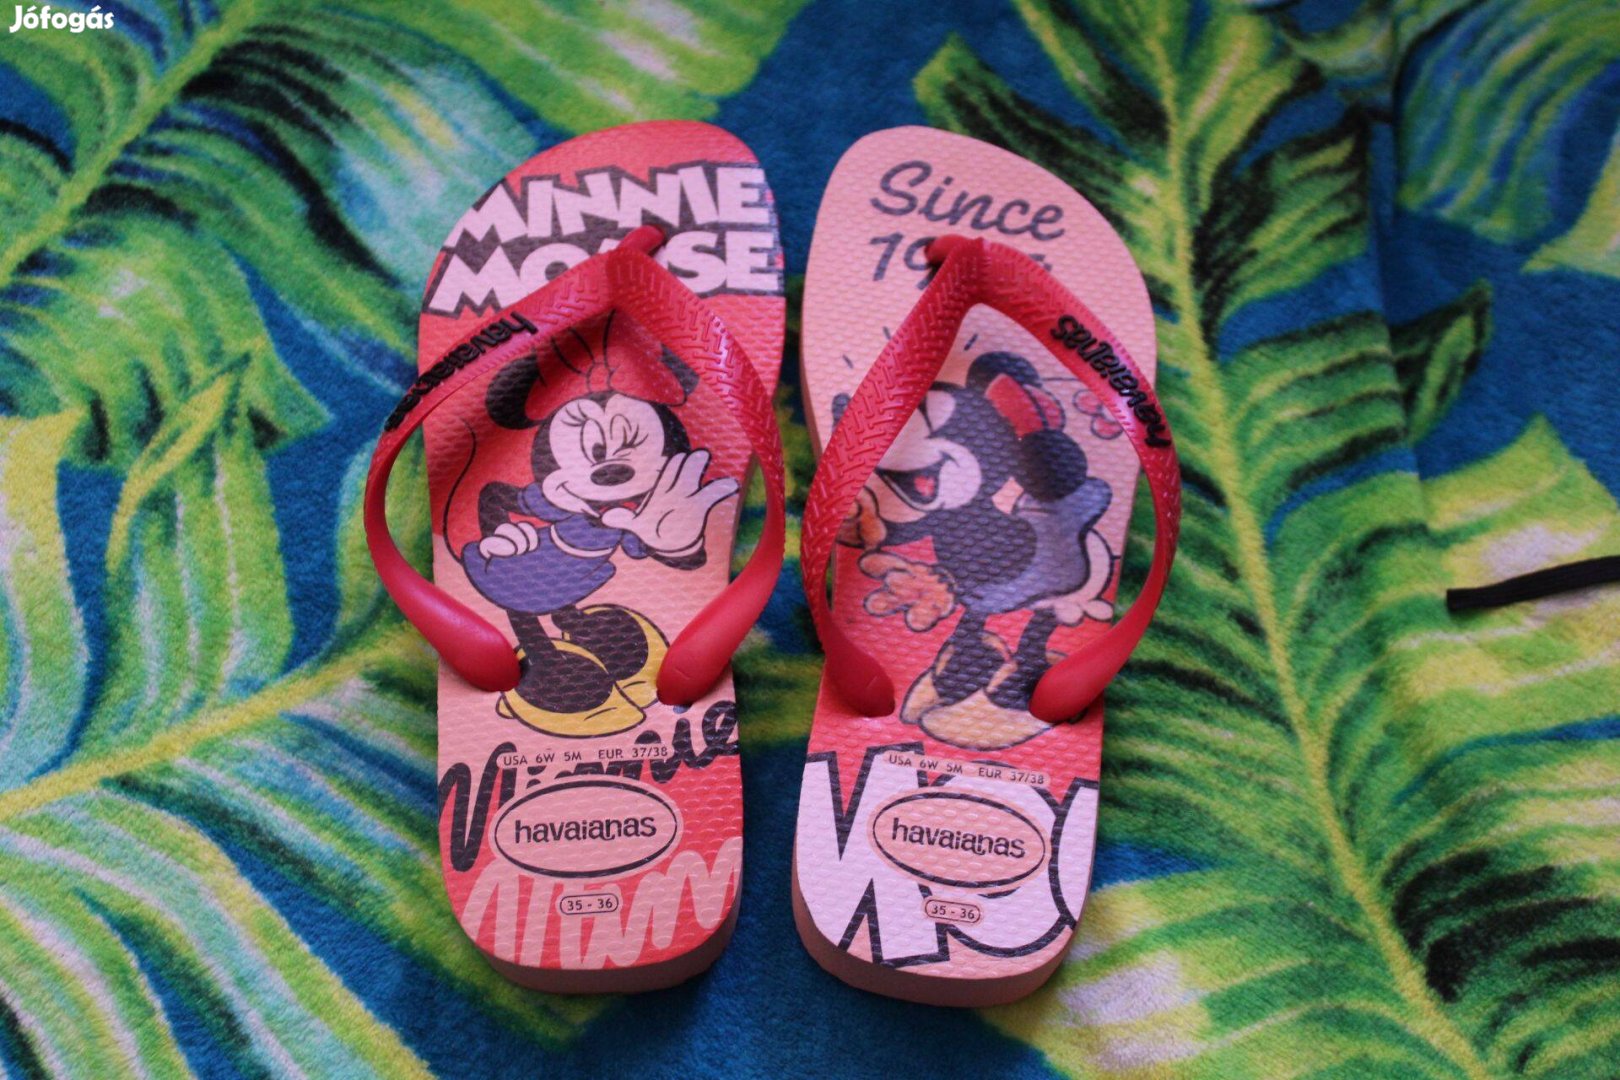 Uj Havaianas Mickey Minnie kulonleges papucs, 37/38 (24cm)